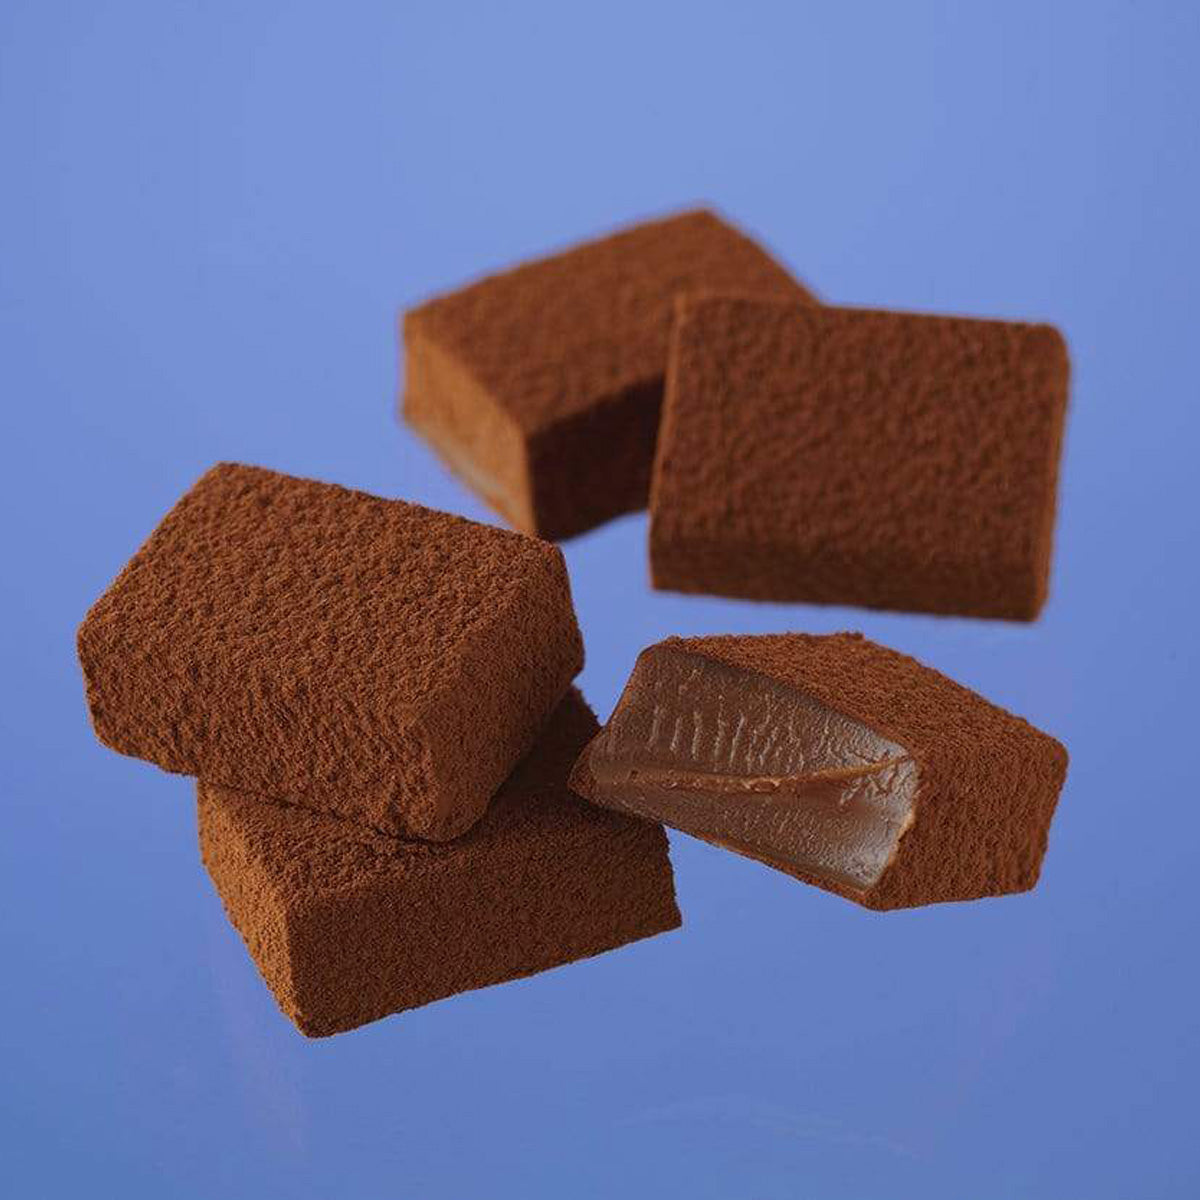 ROYCE' Chocolate - Nama Chocolate "Au Lait" - Image shows brown blocks of chocolate with blue background.